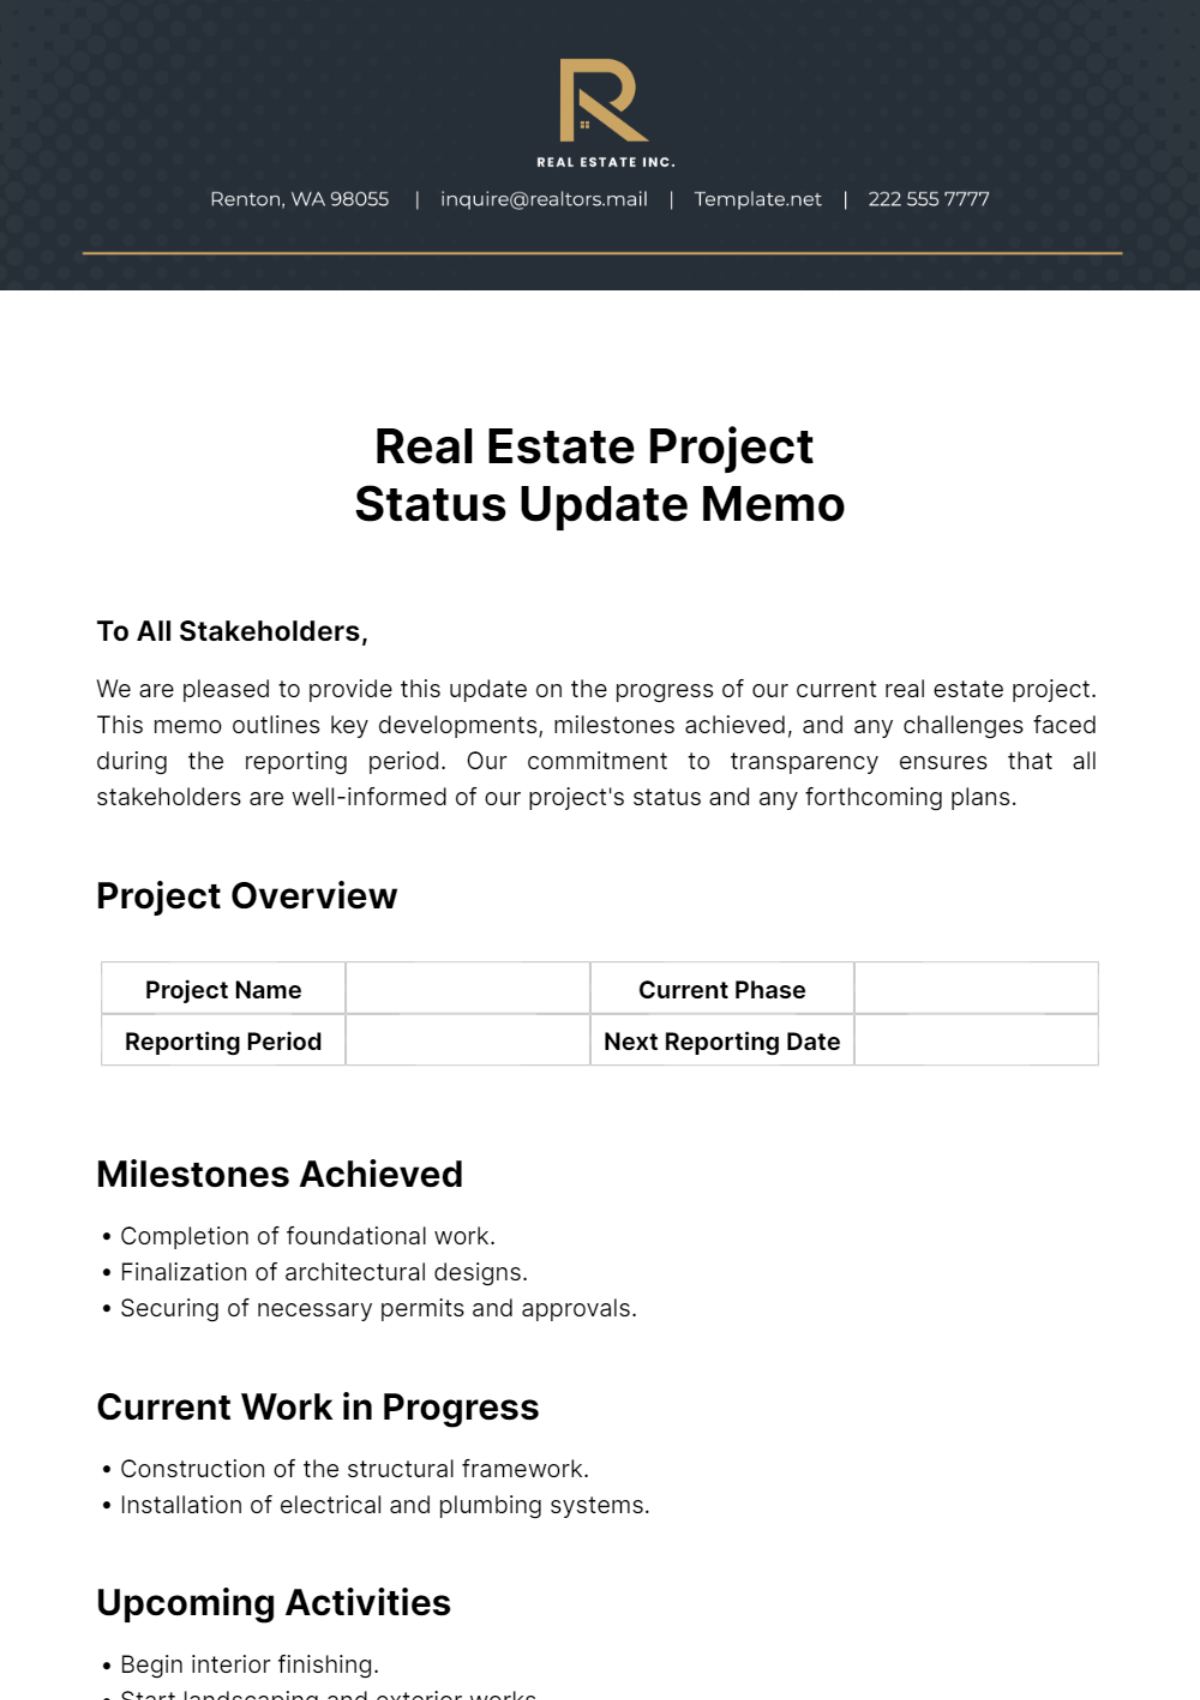 Real Estate Project Status Update Memo Template